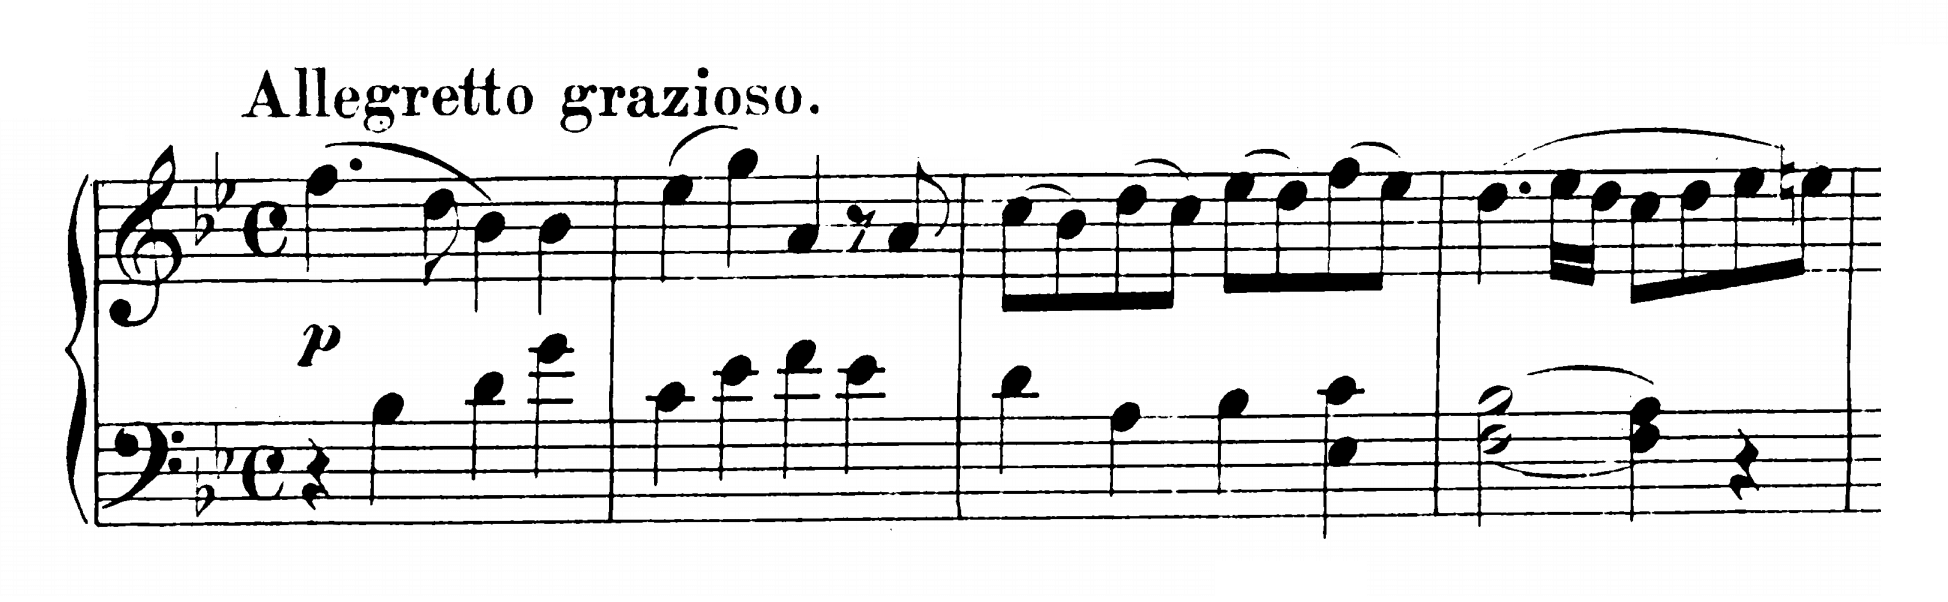 mozart piano sonata in b flat major k 333 analysis